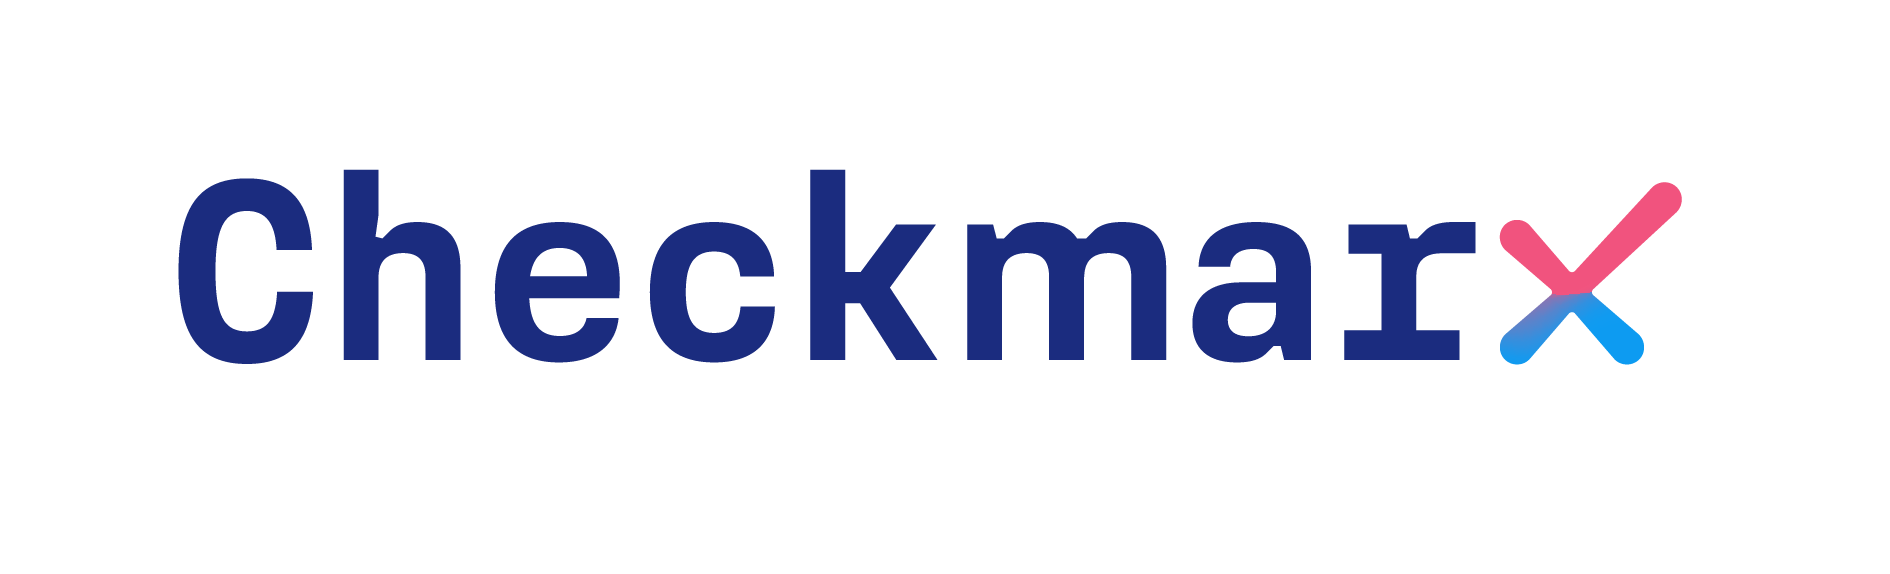 checkmarx_logo